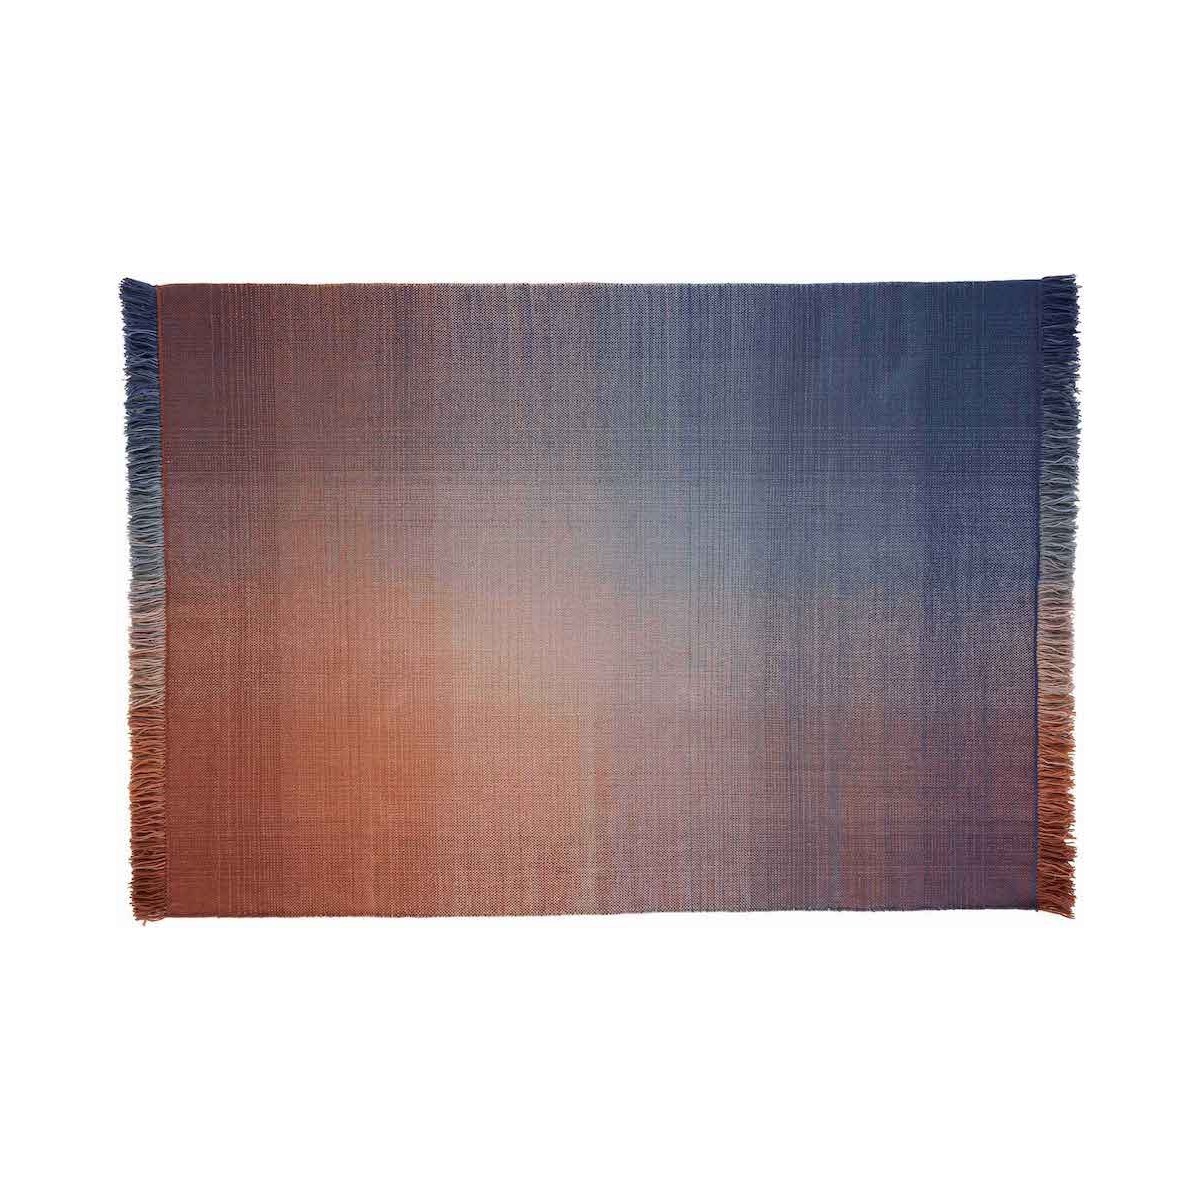 300x400cm - palette 2 - Shade rug